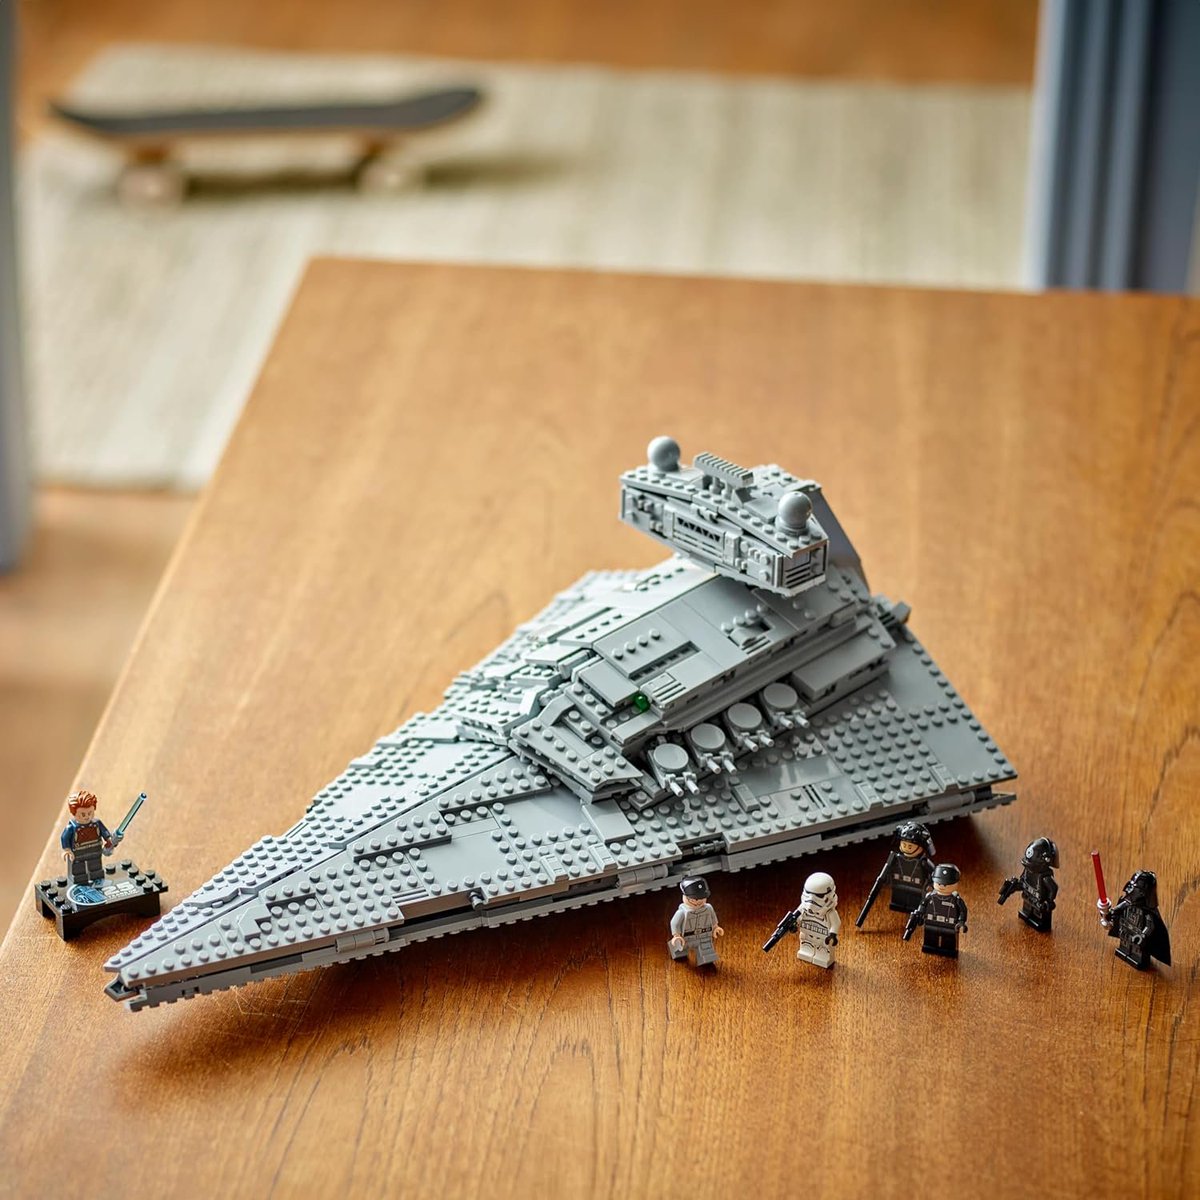 This set is exclusive to Amazon. Preorder LEGO  Imperial Star Destroyer Starship Set  #ad 
amzn.to/3Wt2j2m 

#starwars #stardestroyer #LEGO #LegoMiniFigures #AFOL #LegoSets #Popholmes